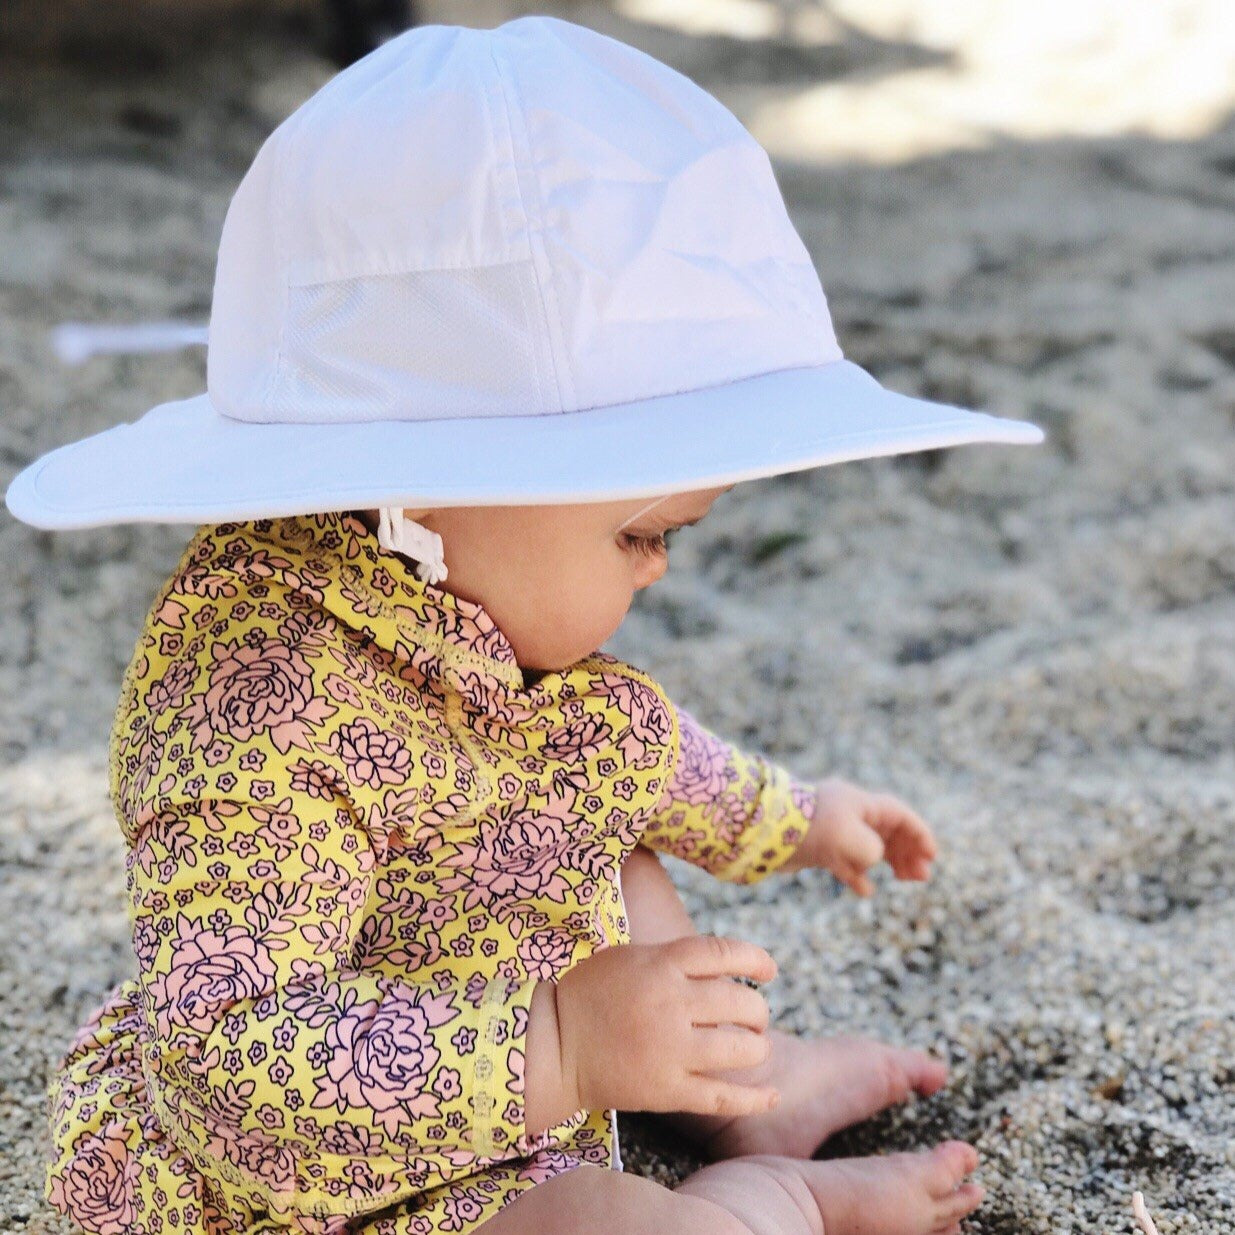 SwimZip Kid's Sun Hat - Wide Brim UPF 50+ Sun Protection Hat | White 6-24 Month